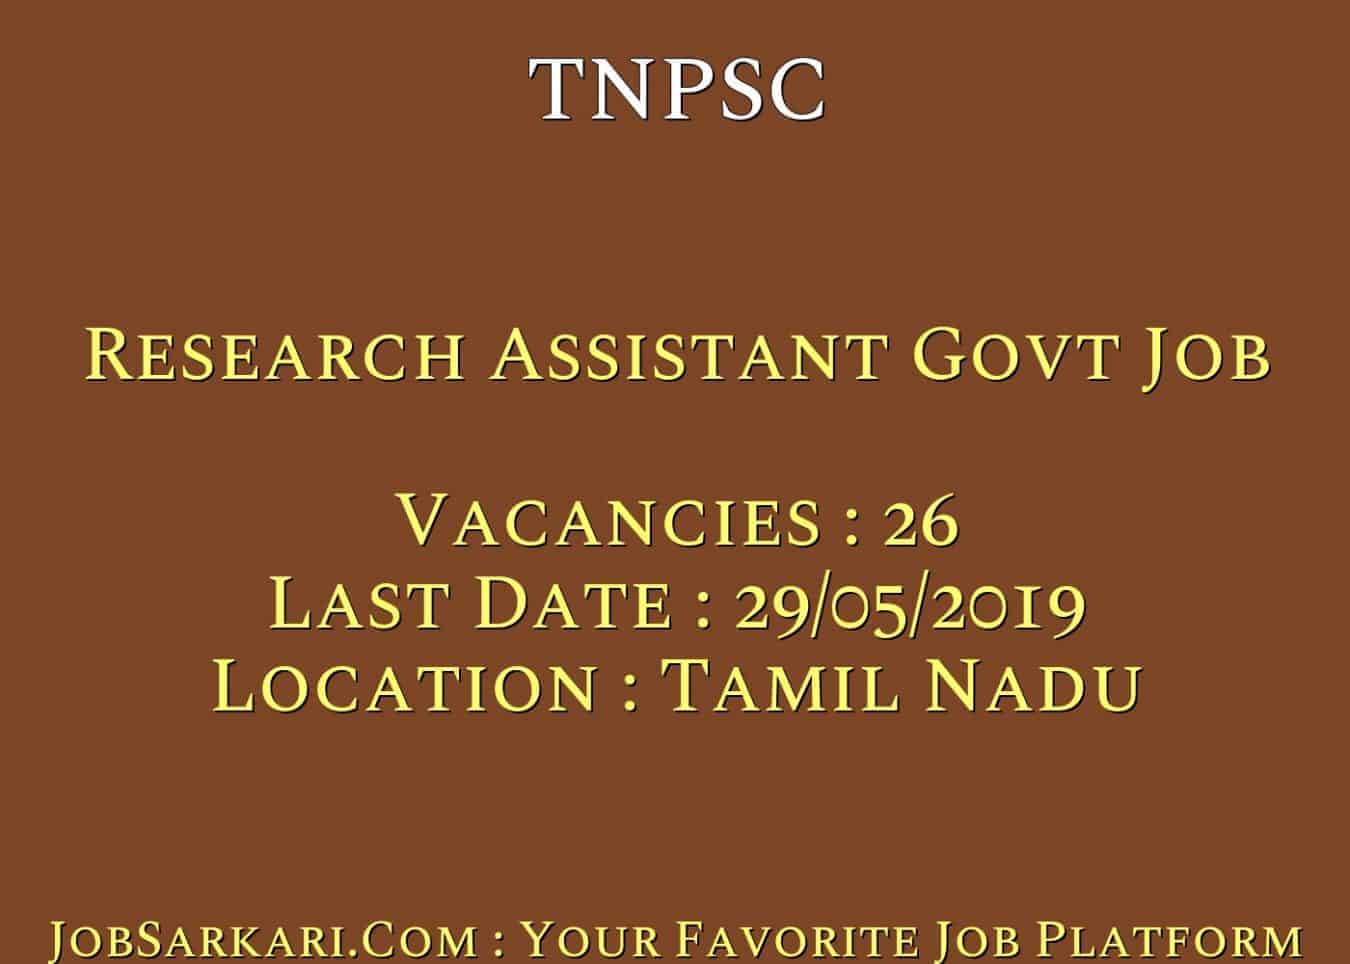 TNPSC Recruitment 2019 For Research Assistant Govt Job